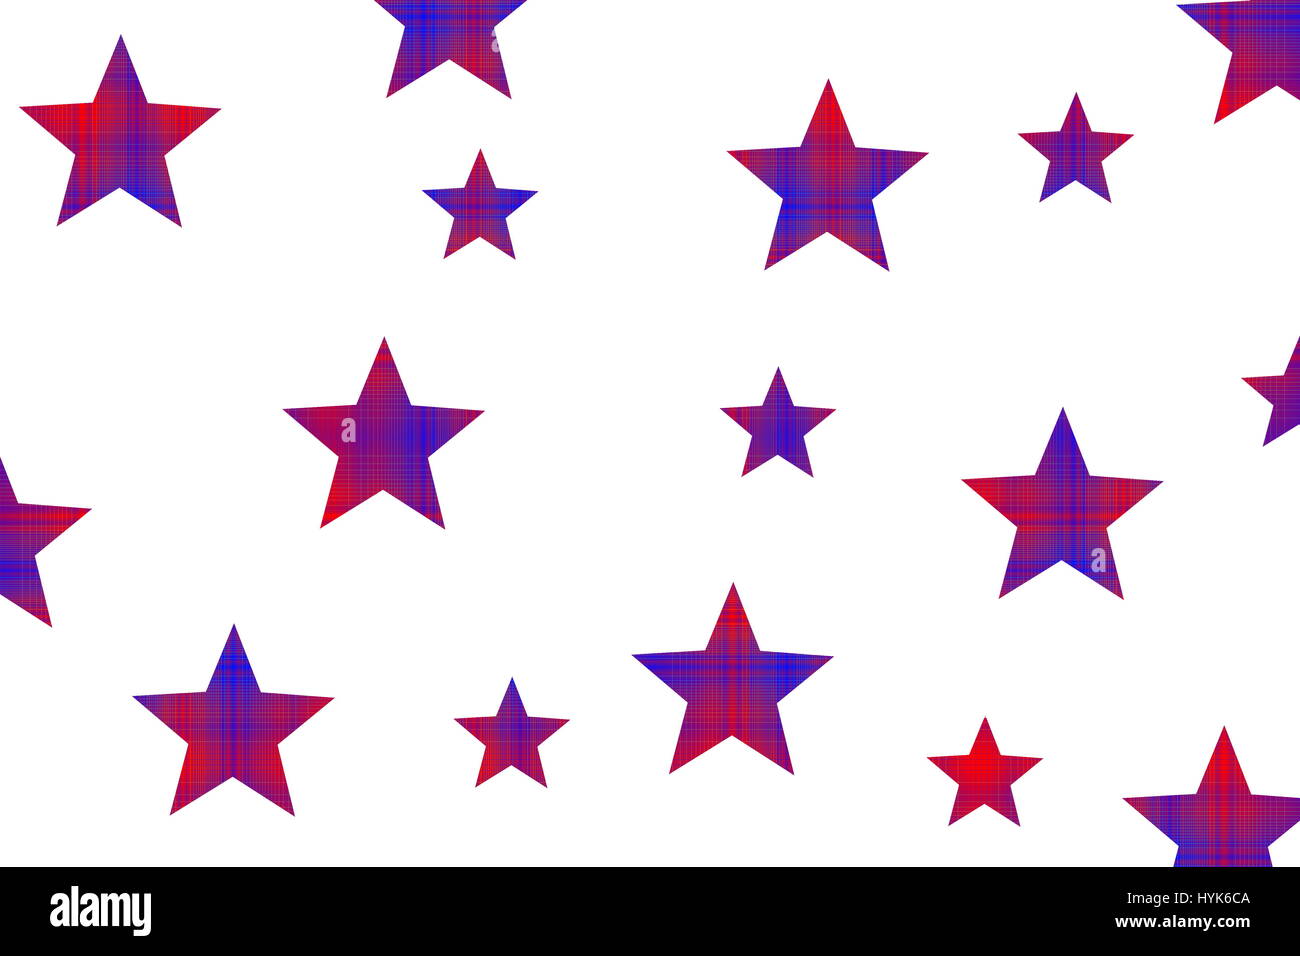 Checkered stars on a white background Stock Photo